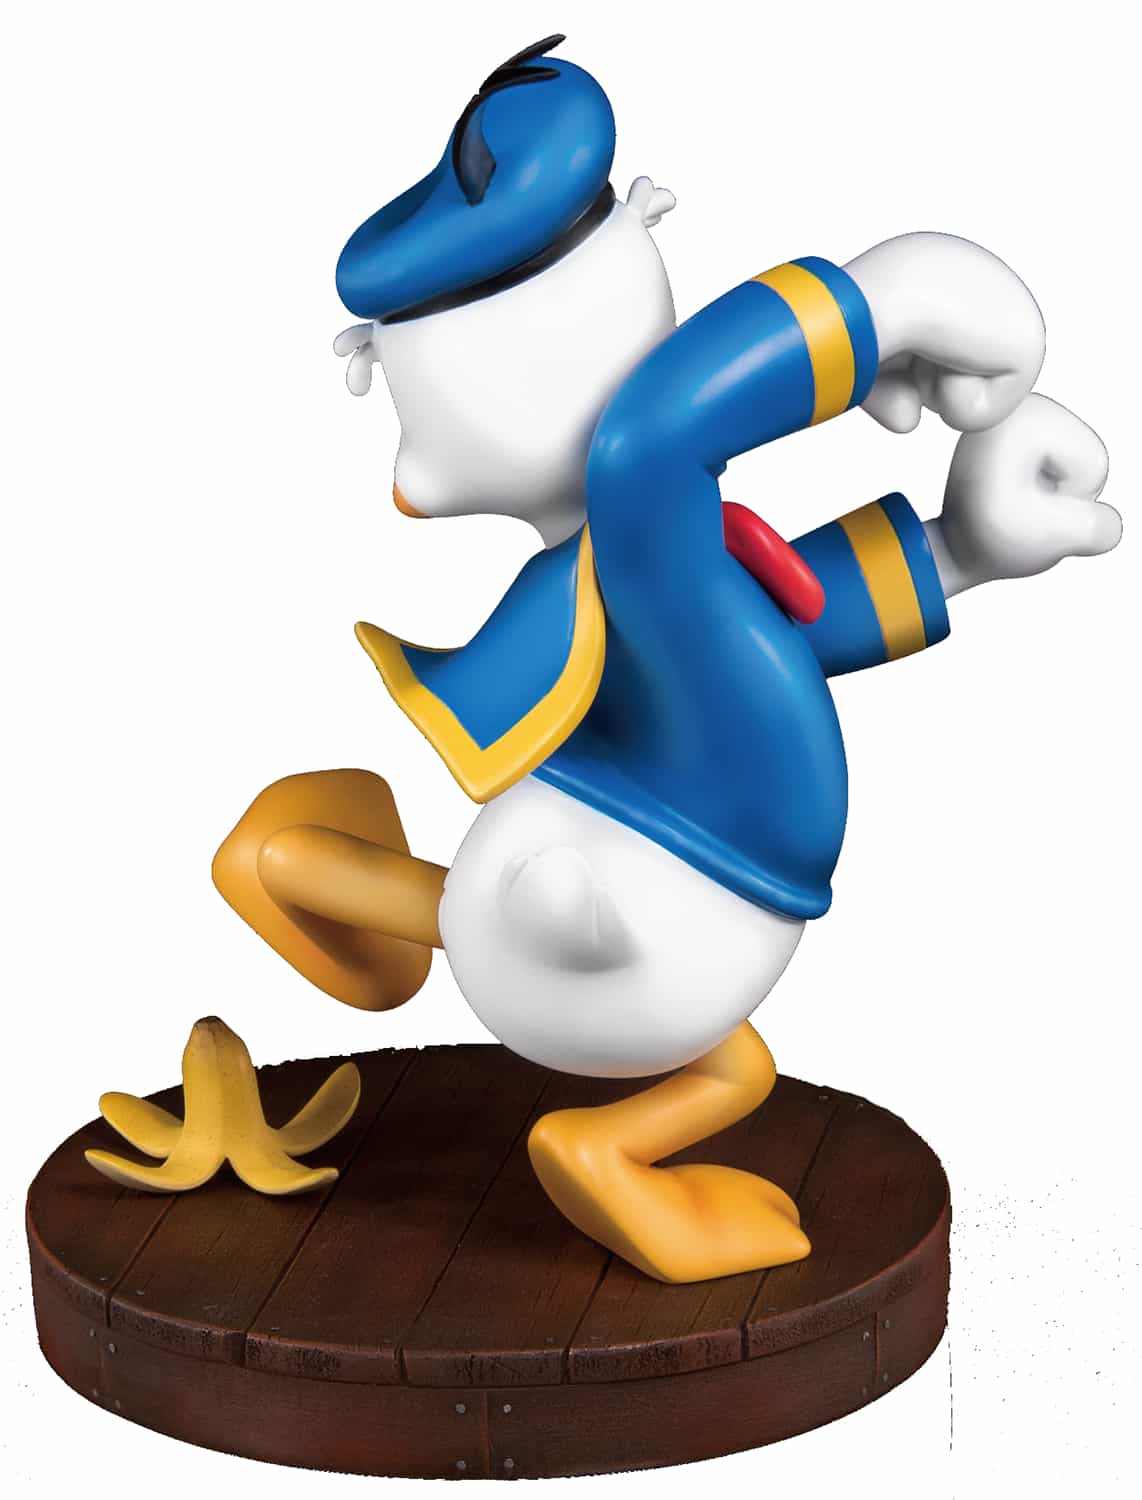 New PX Donald Duck Figure Coming Soon – DisKingdom.com